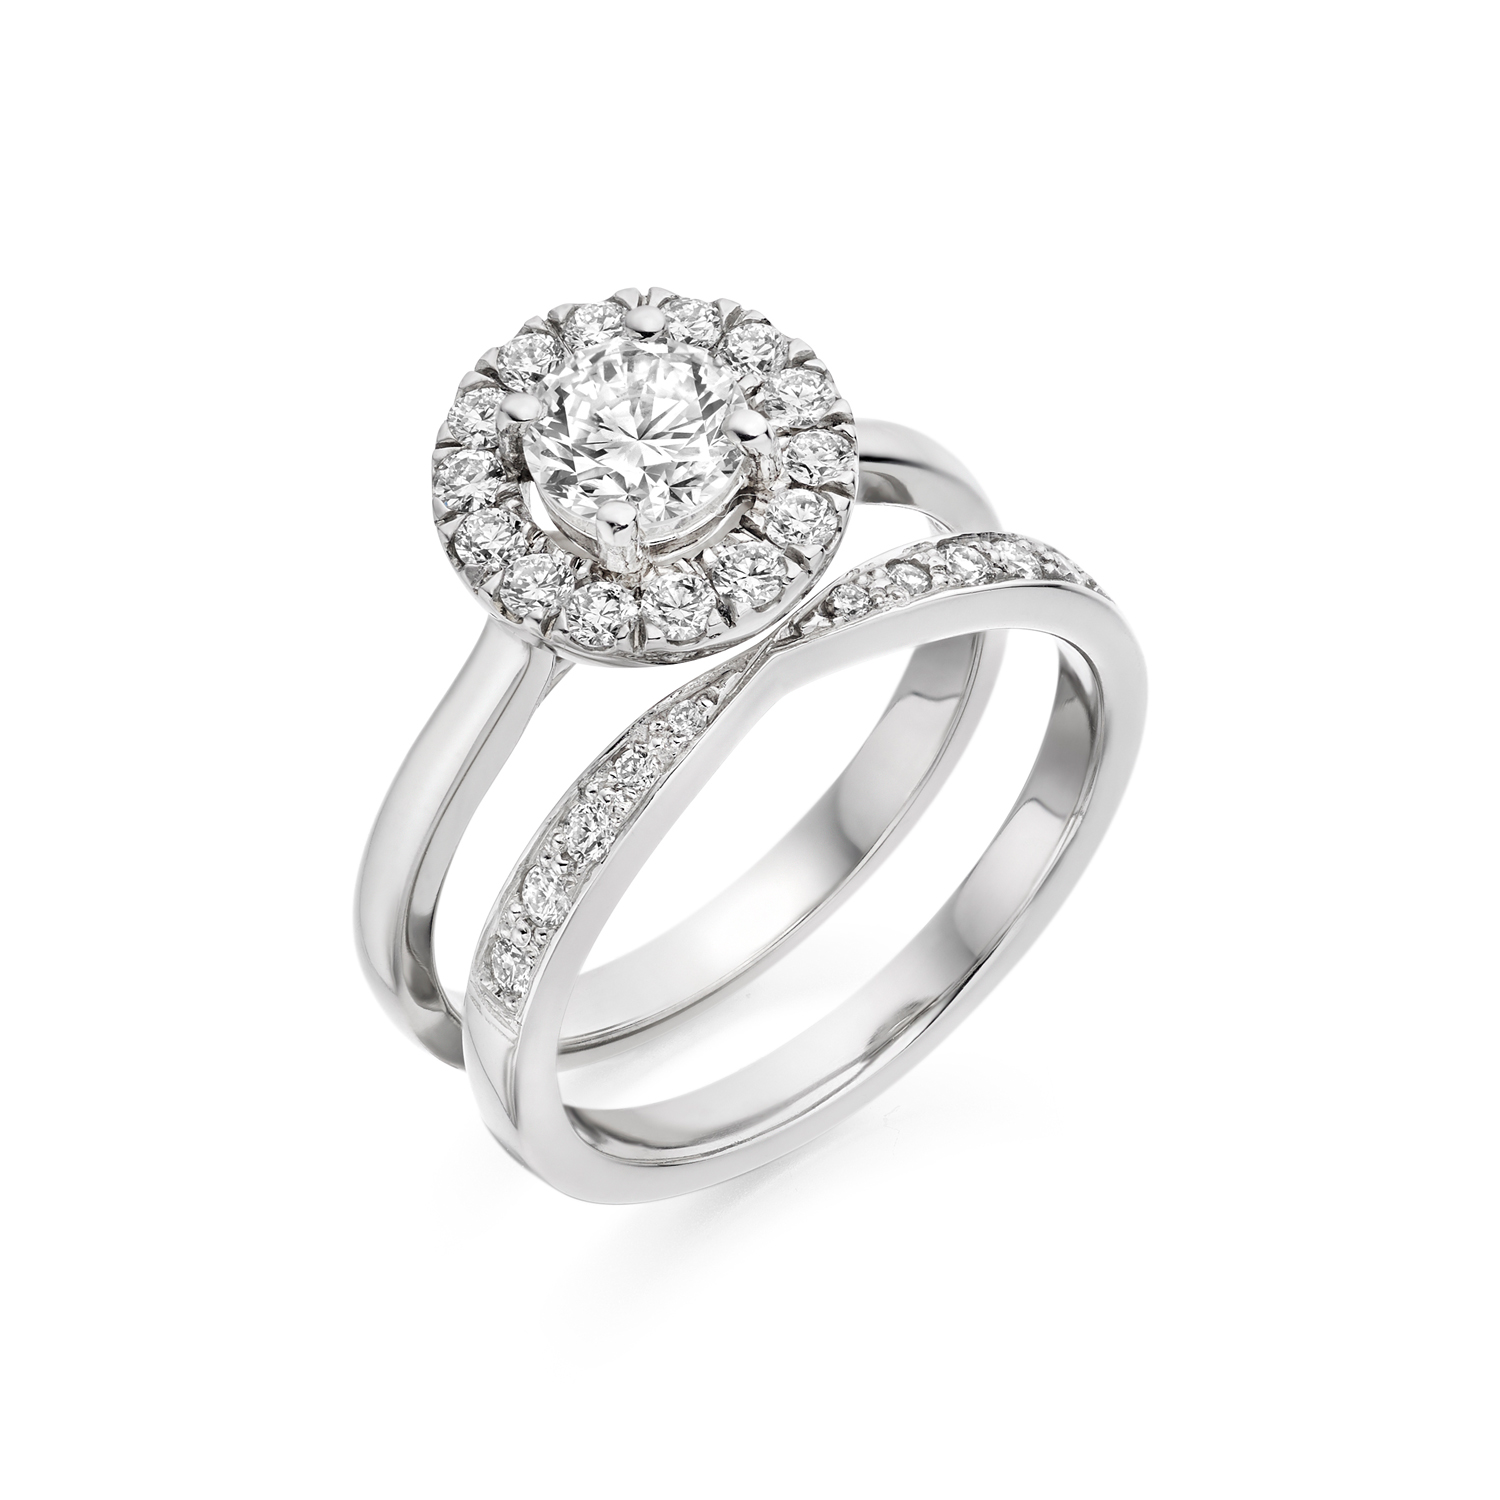 Brilliant cut diamond ring with wide halo diamond surround